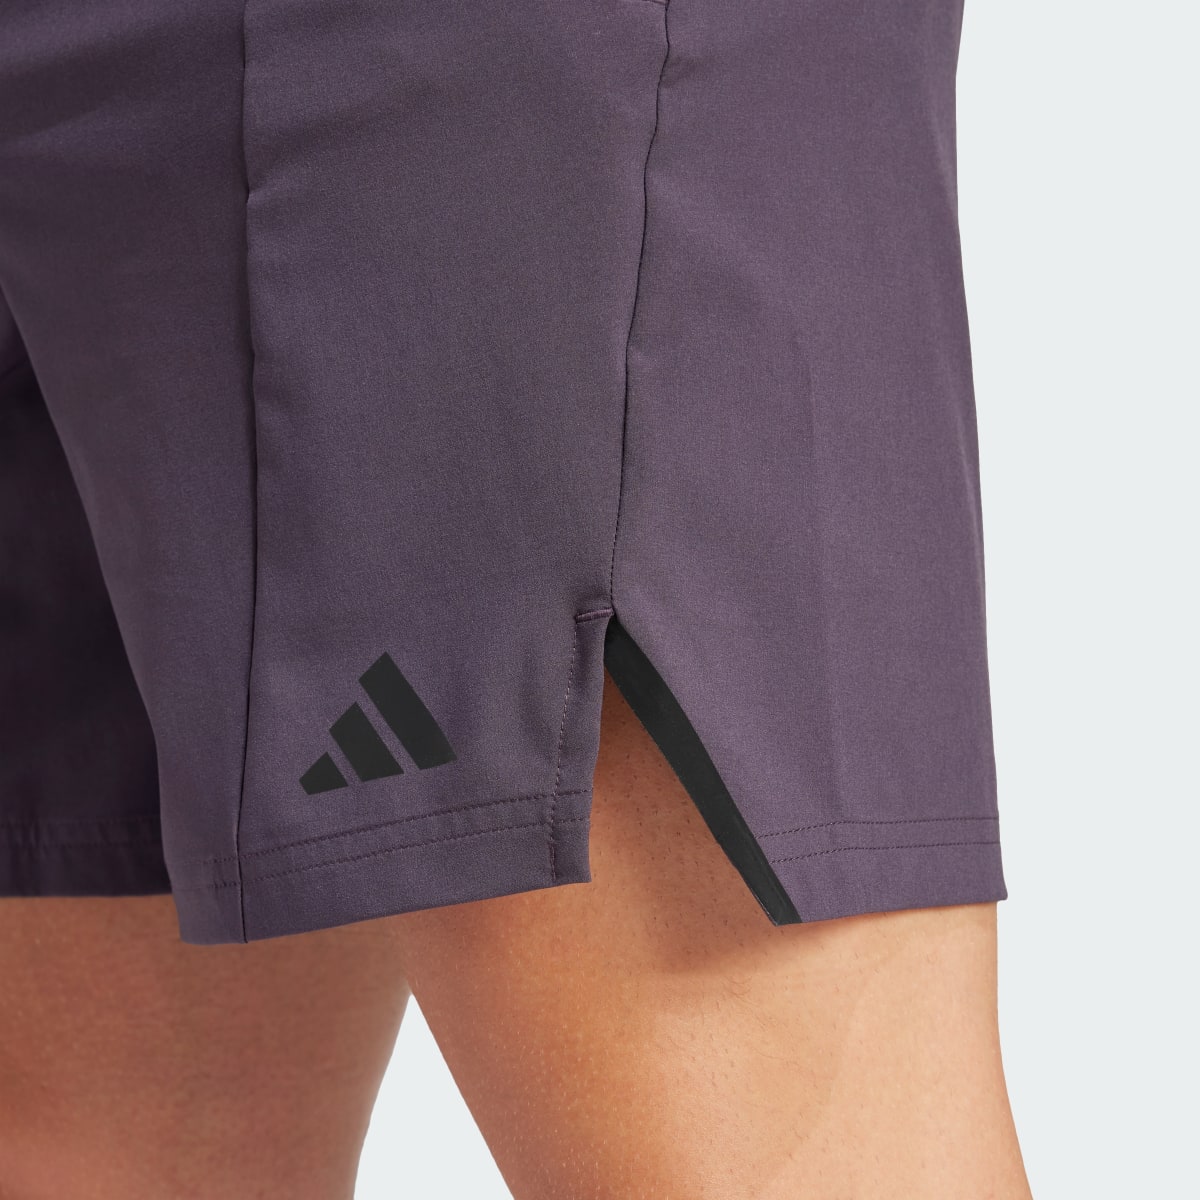 Adidas Short Designed for Training Workout. 5